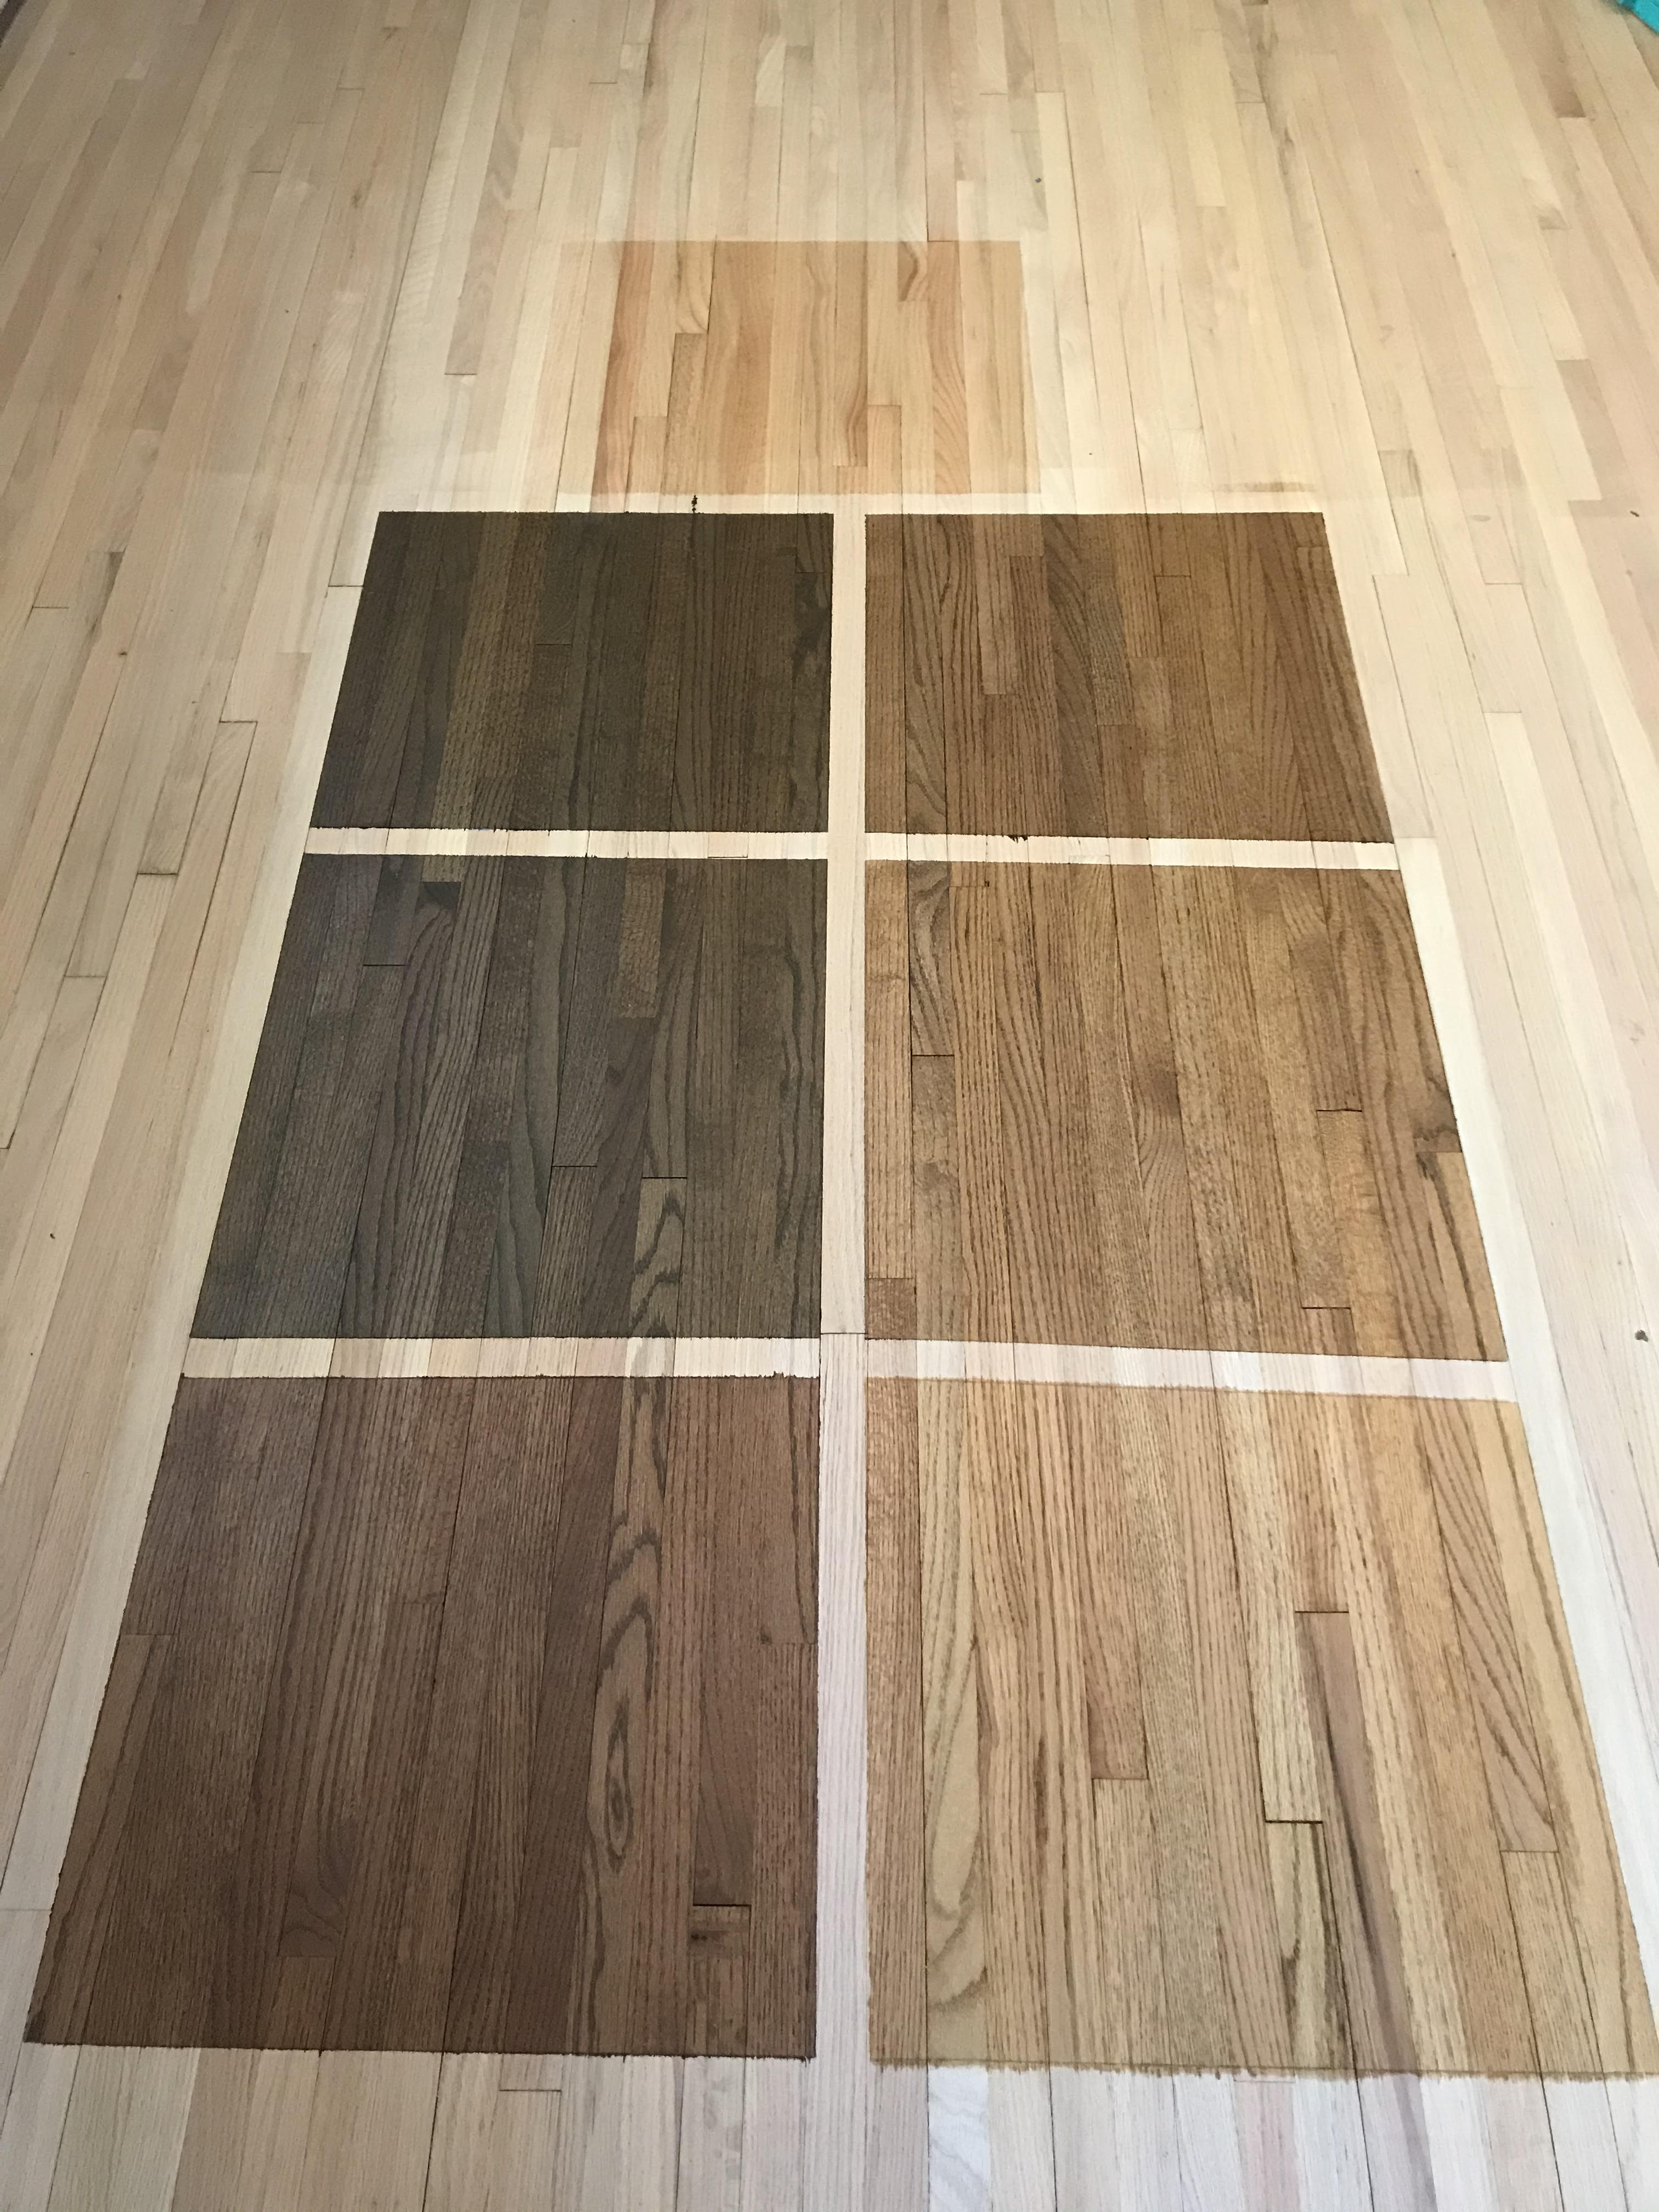 Floor Stain Test Squares